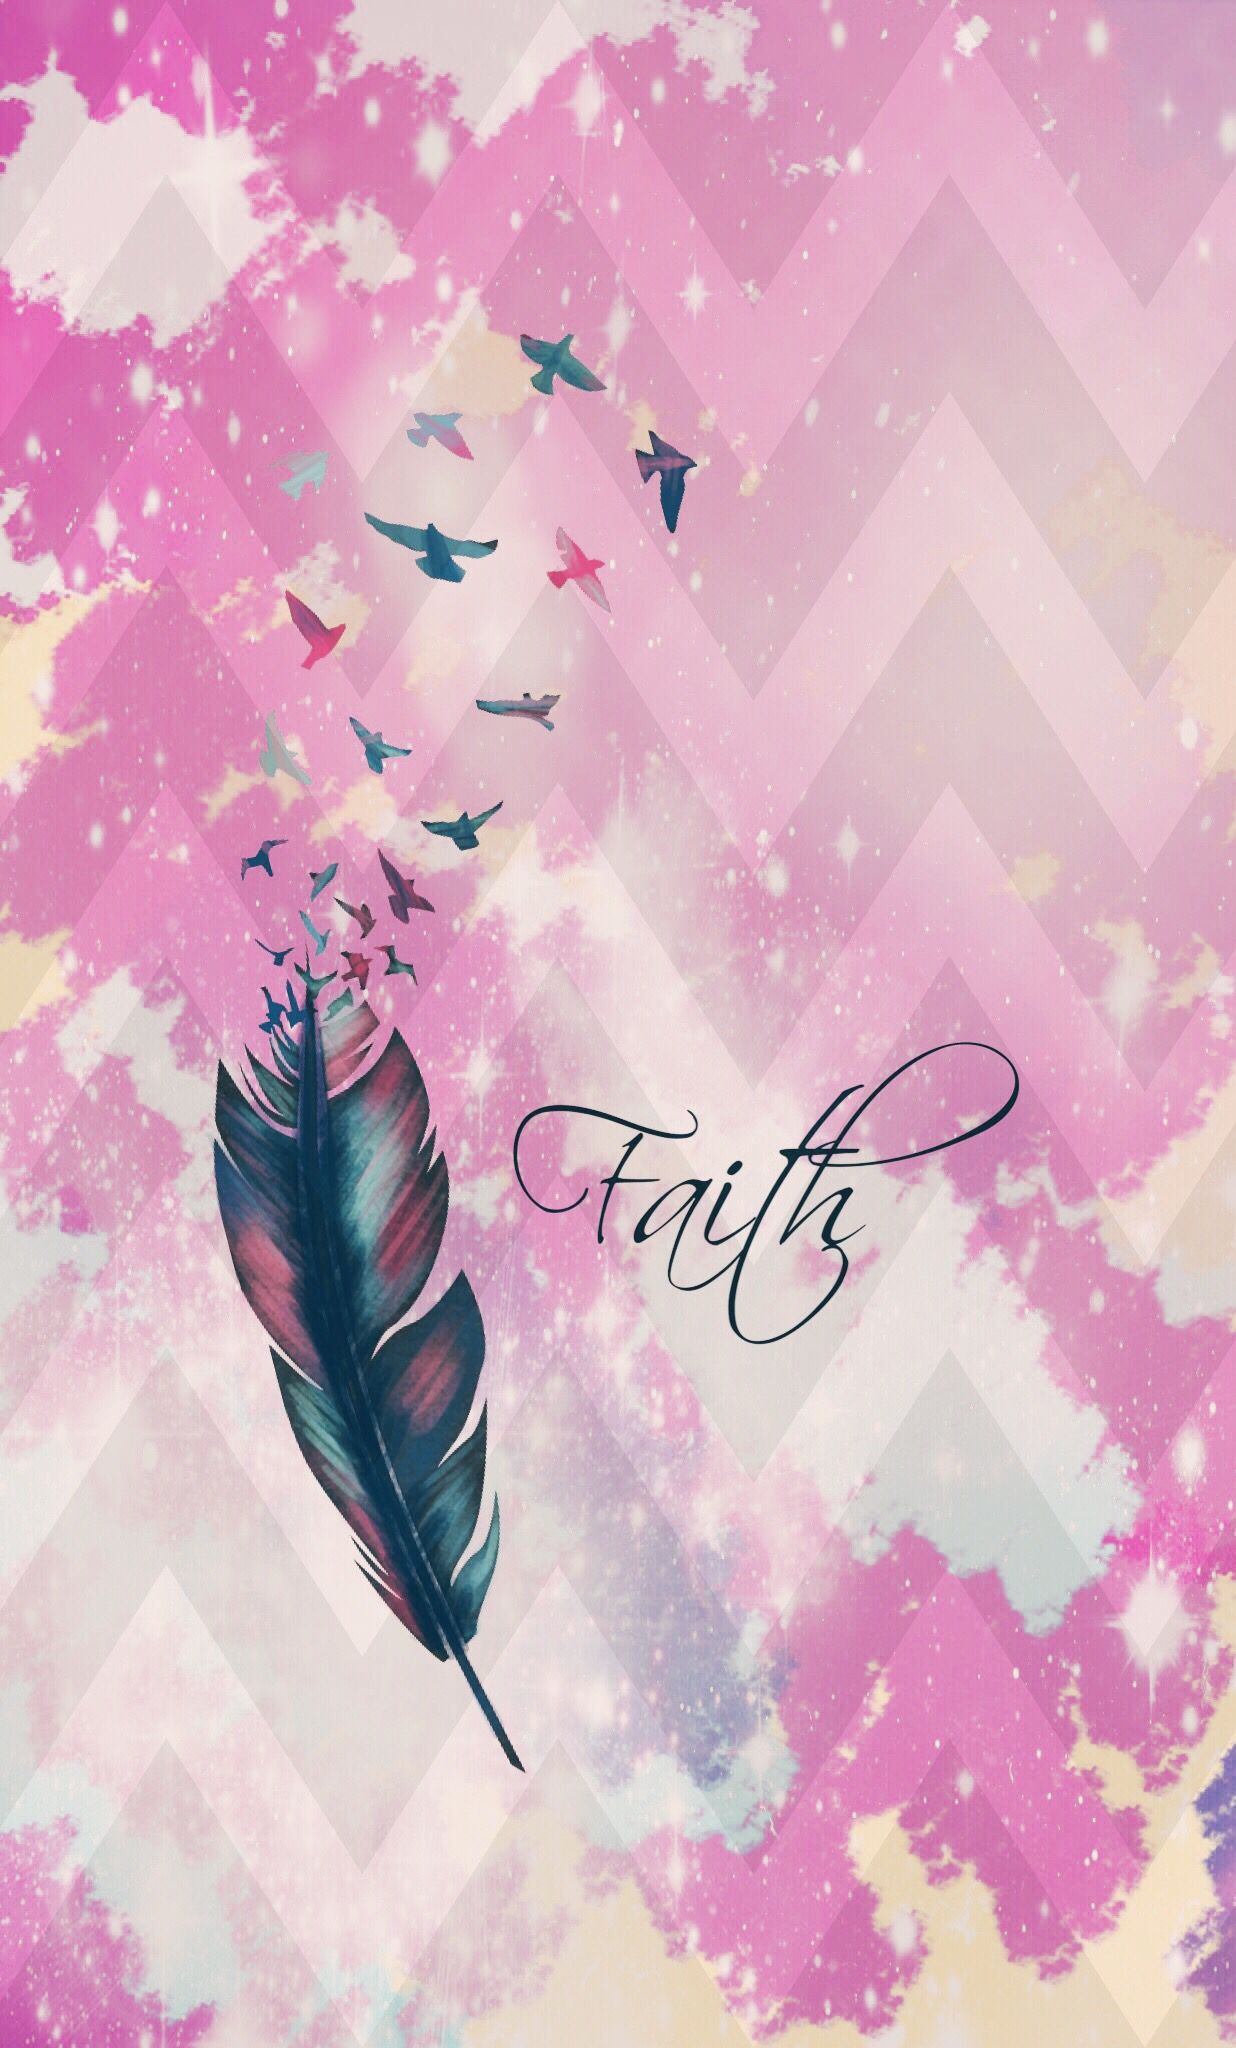 Keep Faith On Allah - HD Wallpaper 